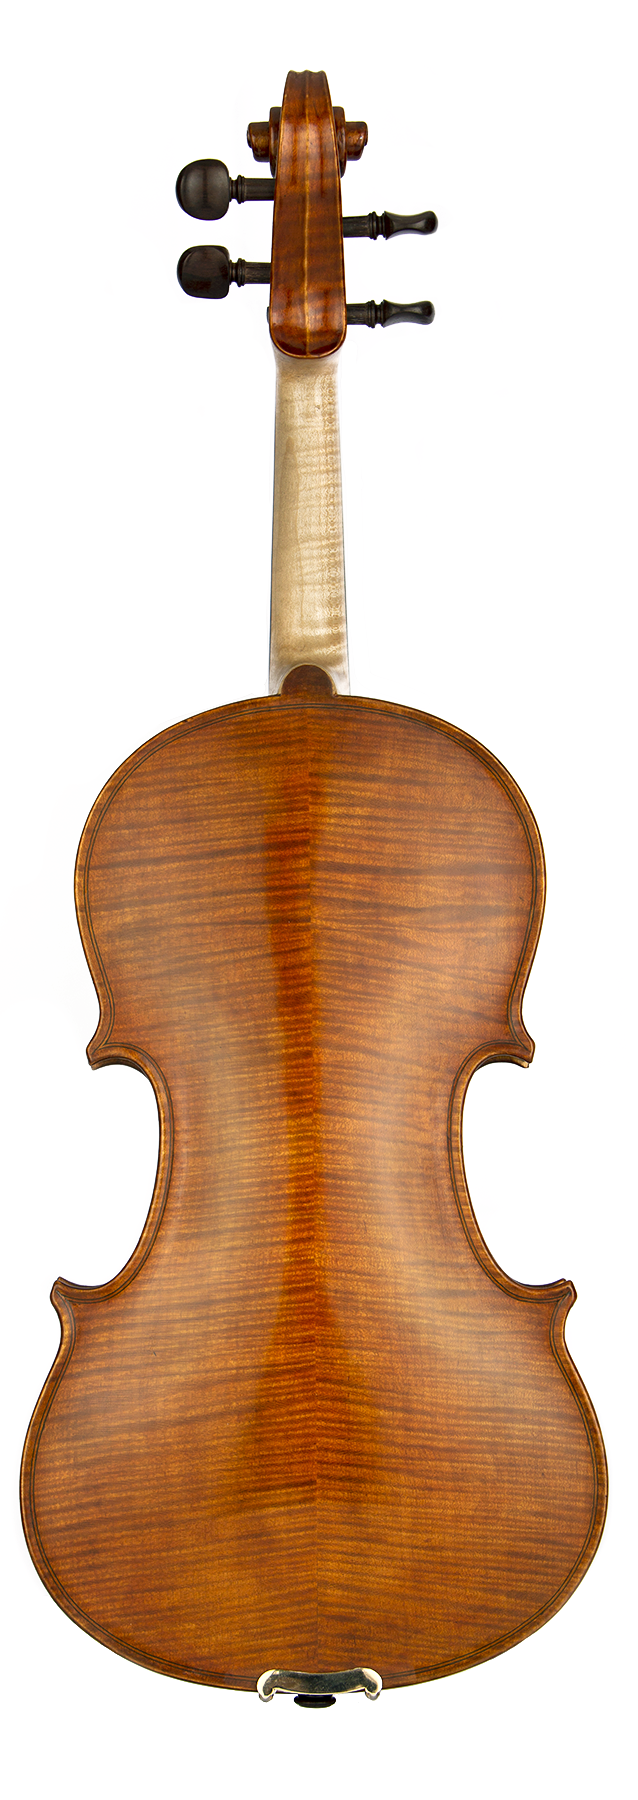 Giuseppe Pellacani Op. 112 Violin